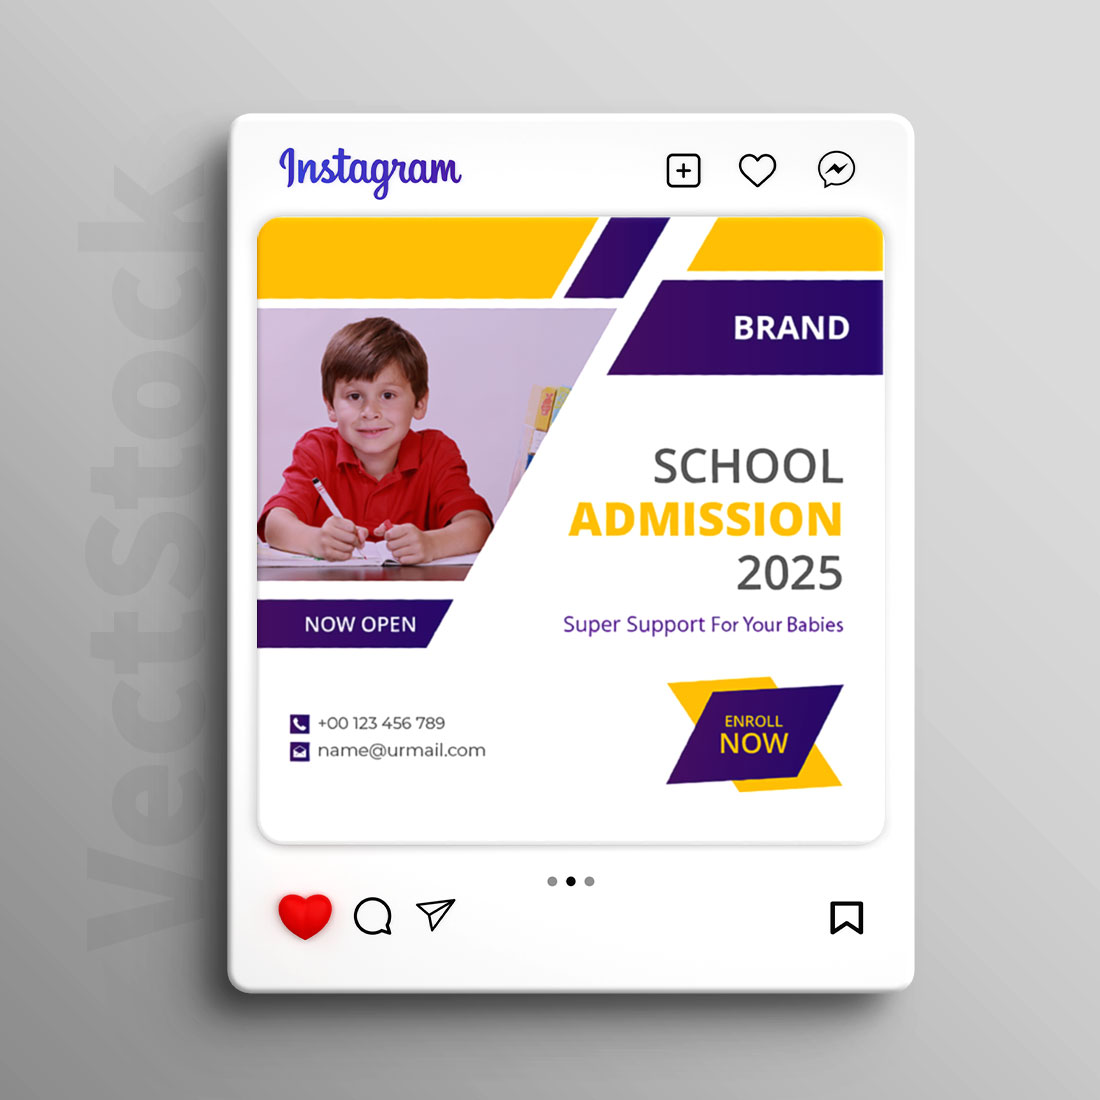 Kids school admission social media Instagram post and banner template design cover image.